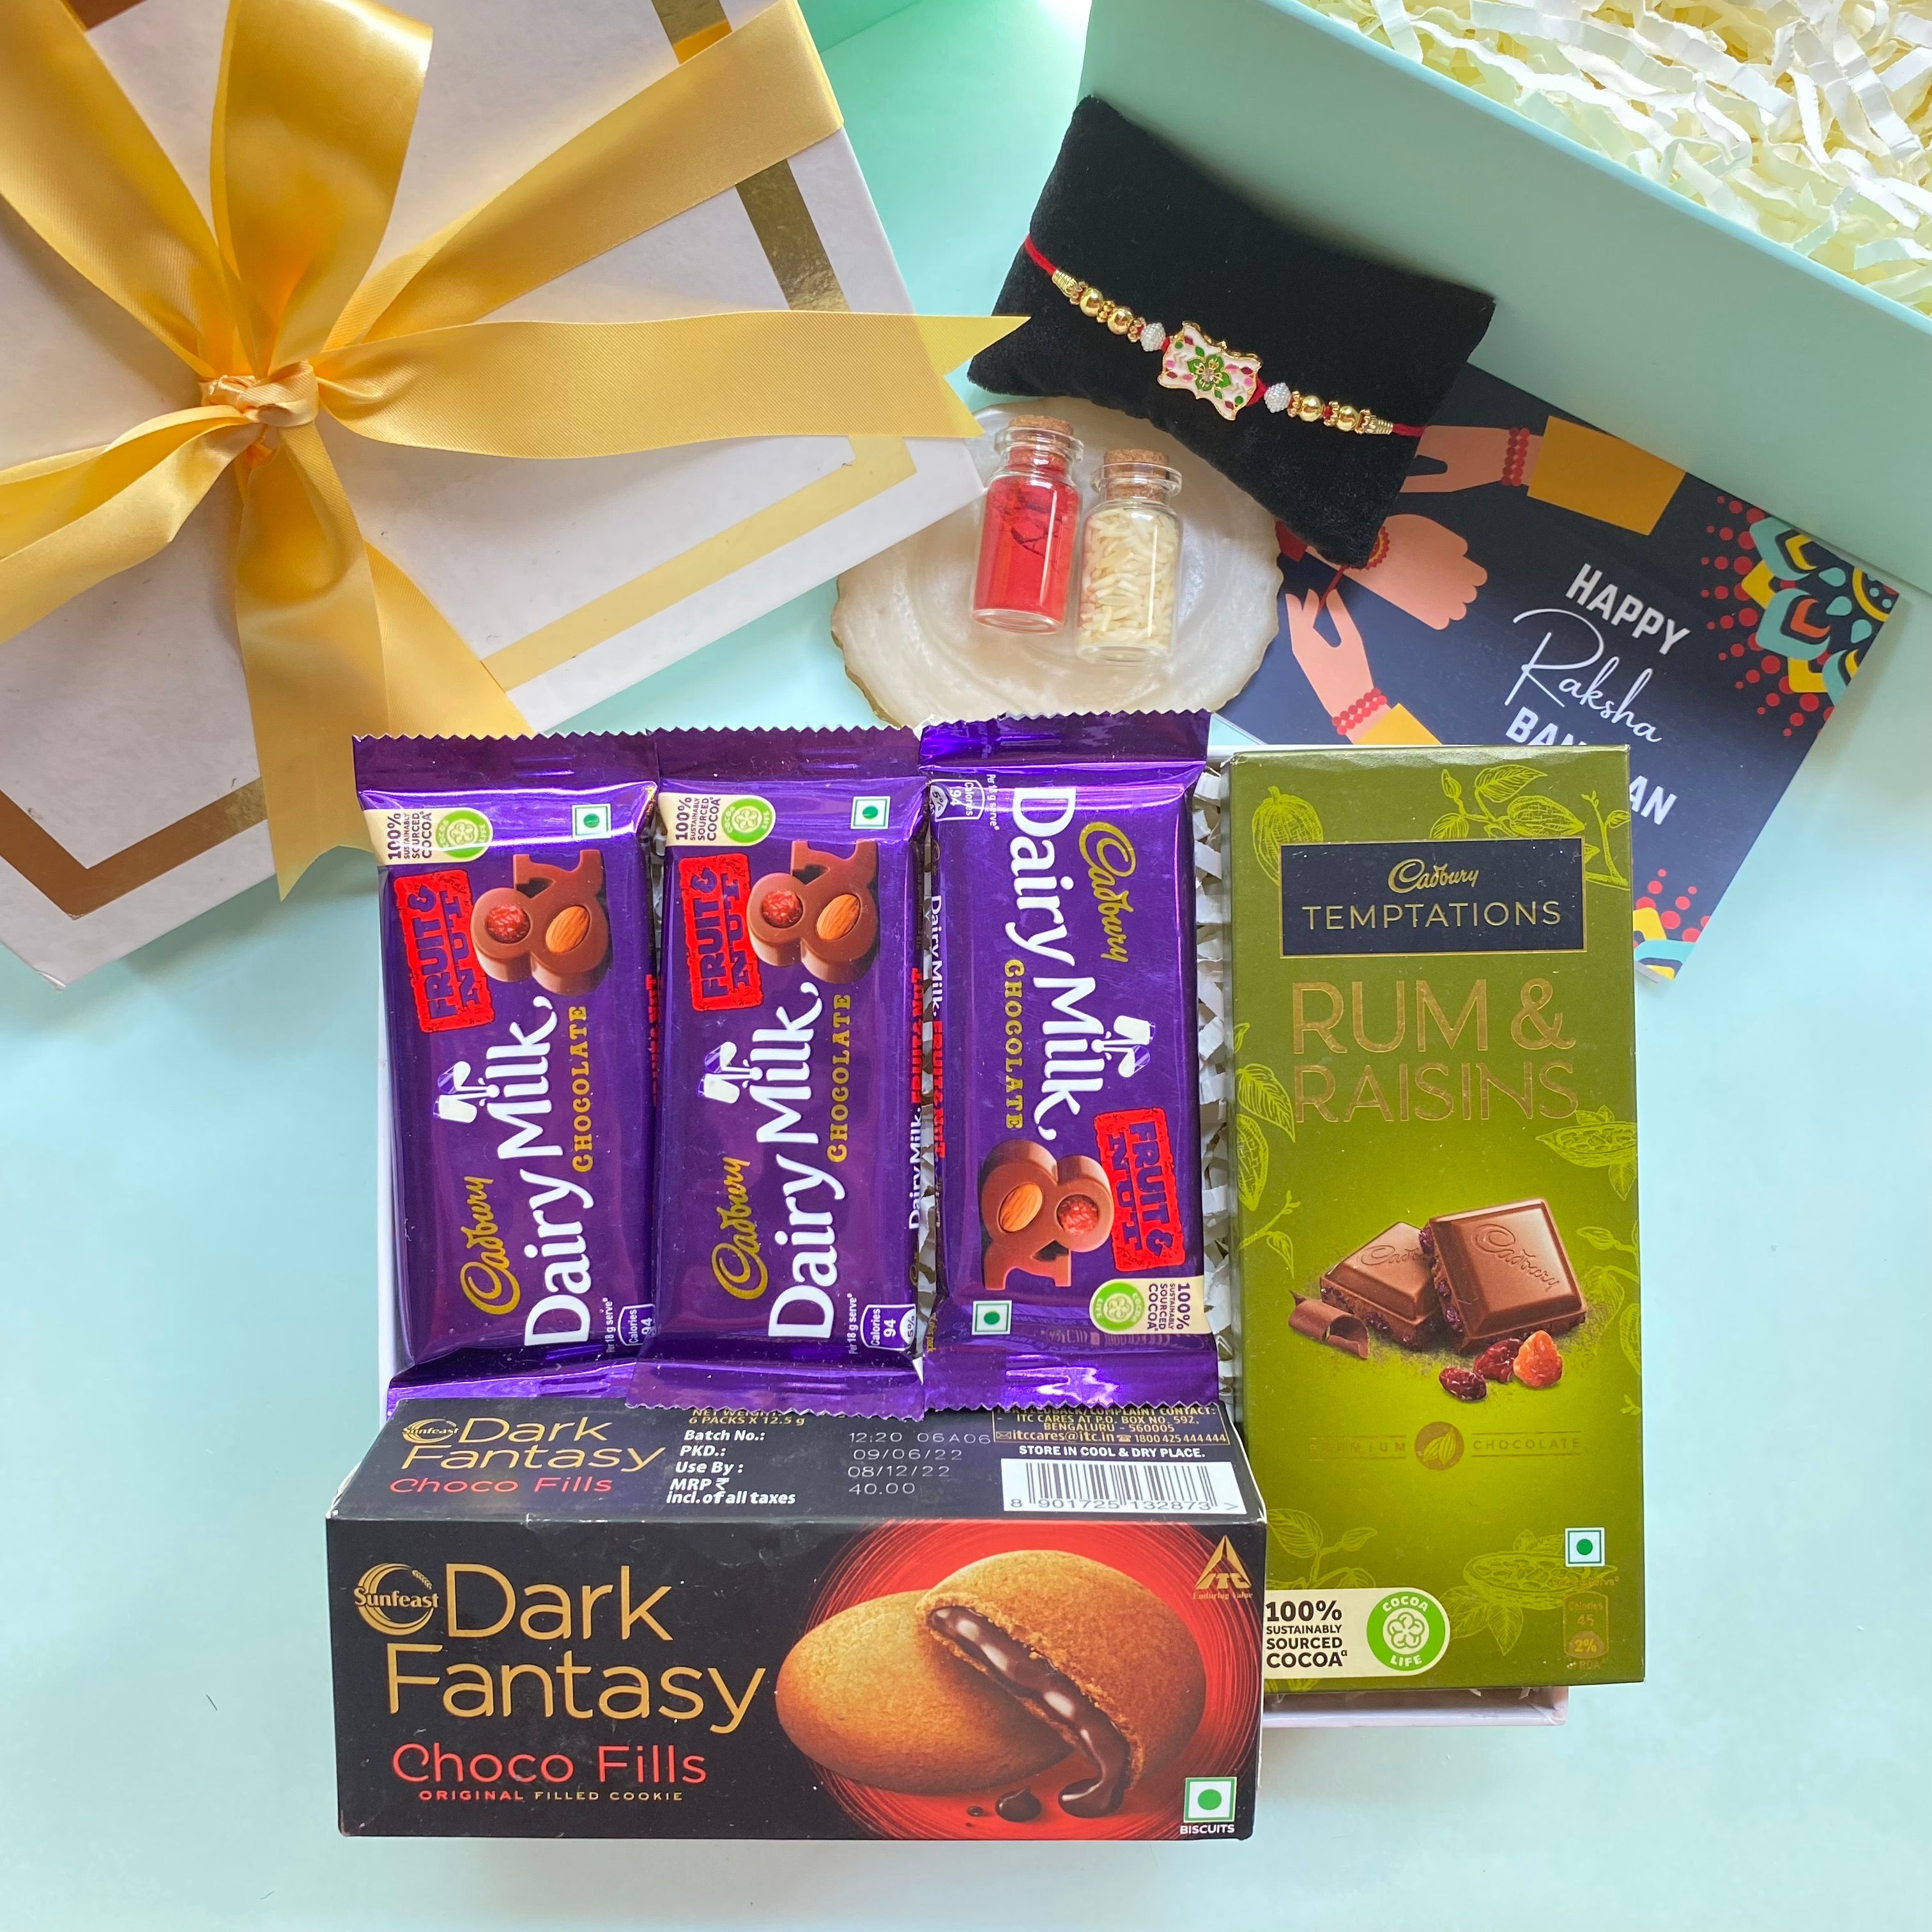 Send pretty stone rakhi pair with cadbury chocolates in bamboo box to  Chennai, Free Delivery - ChennaiOnlineFlorists